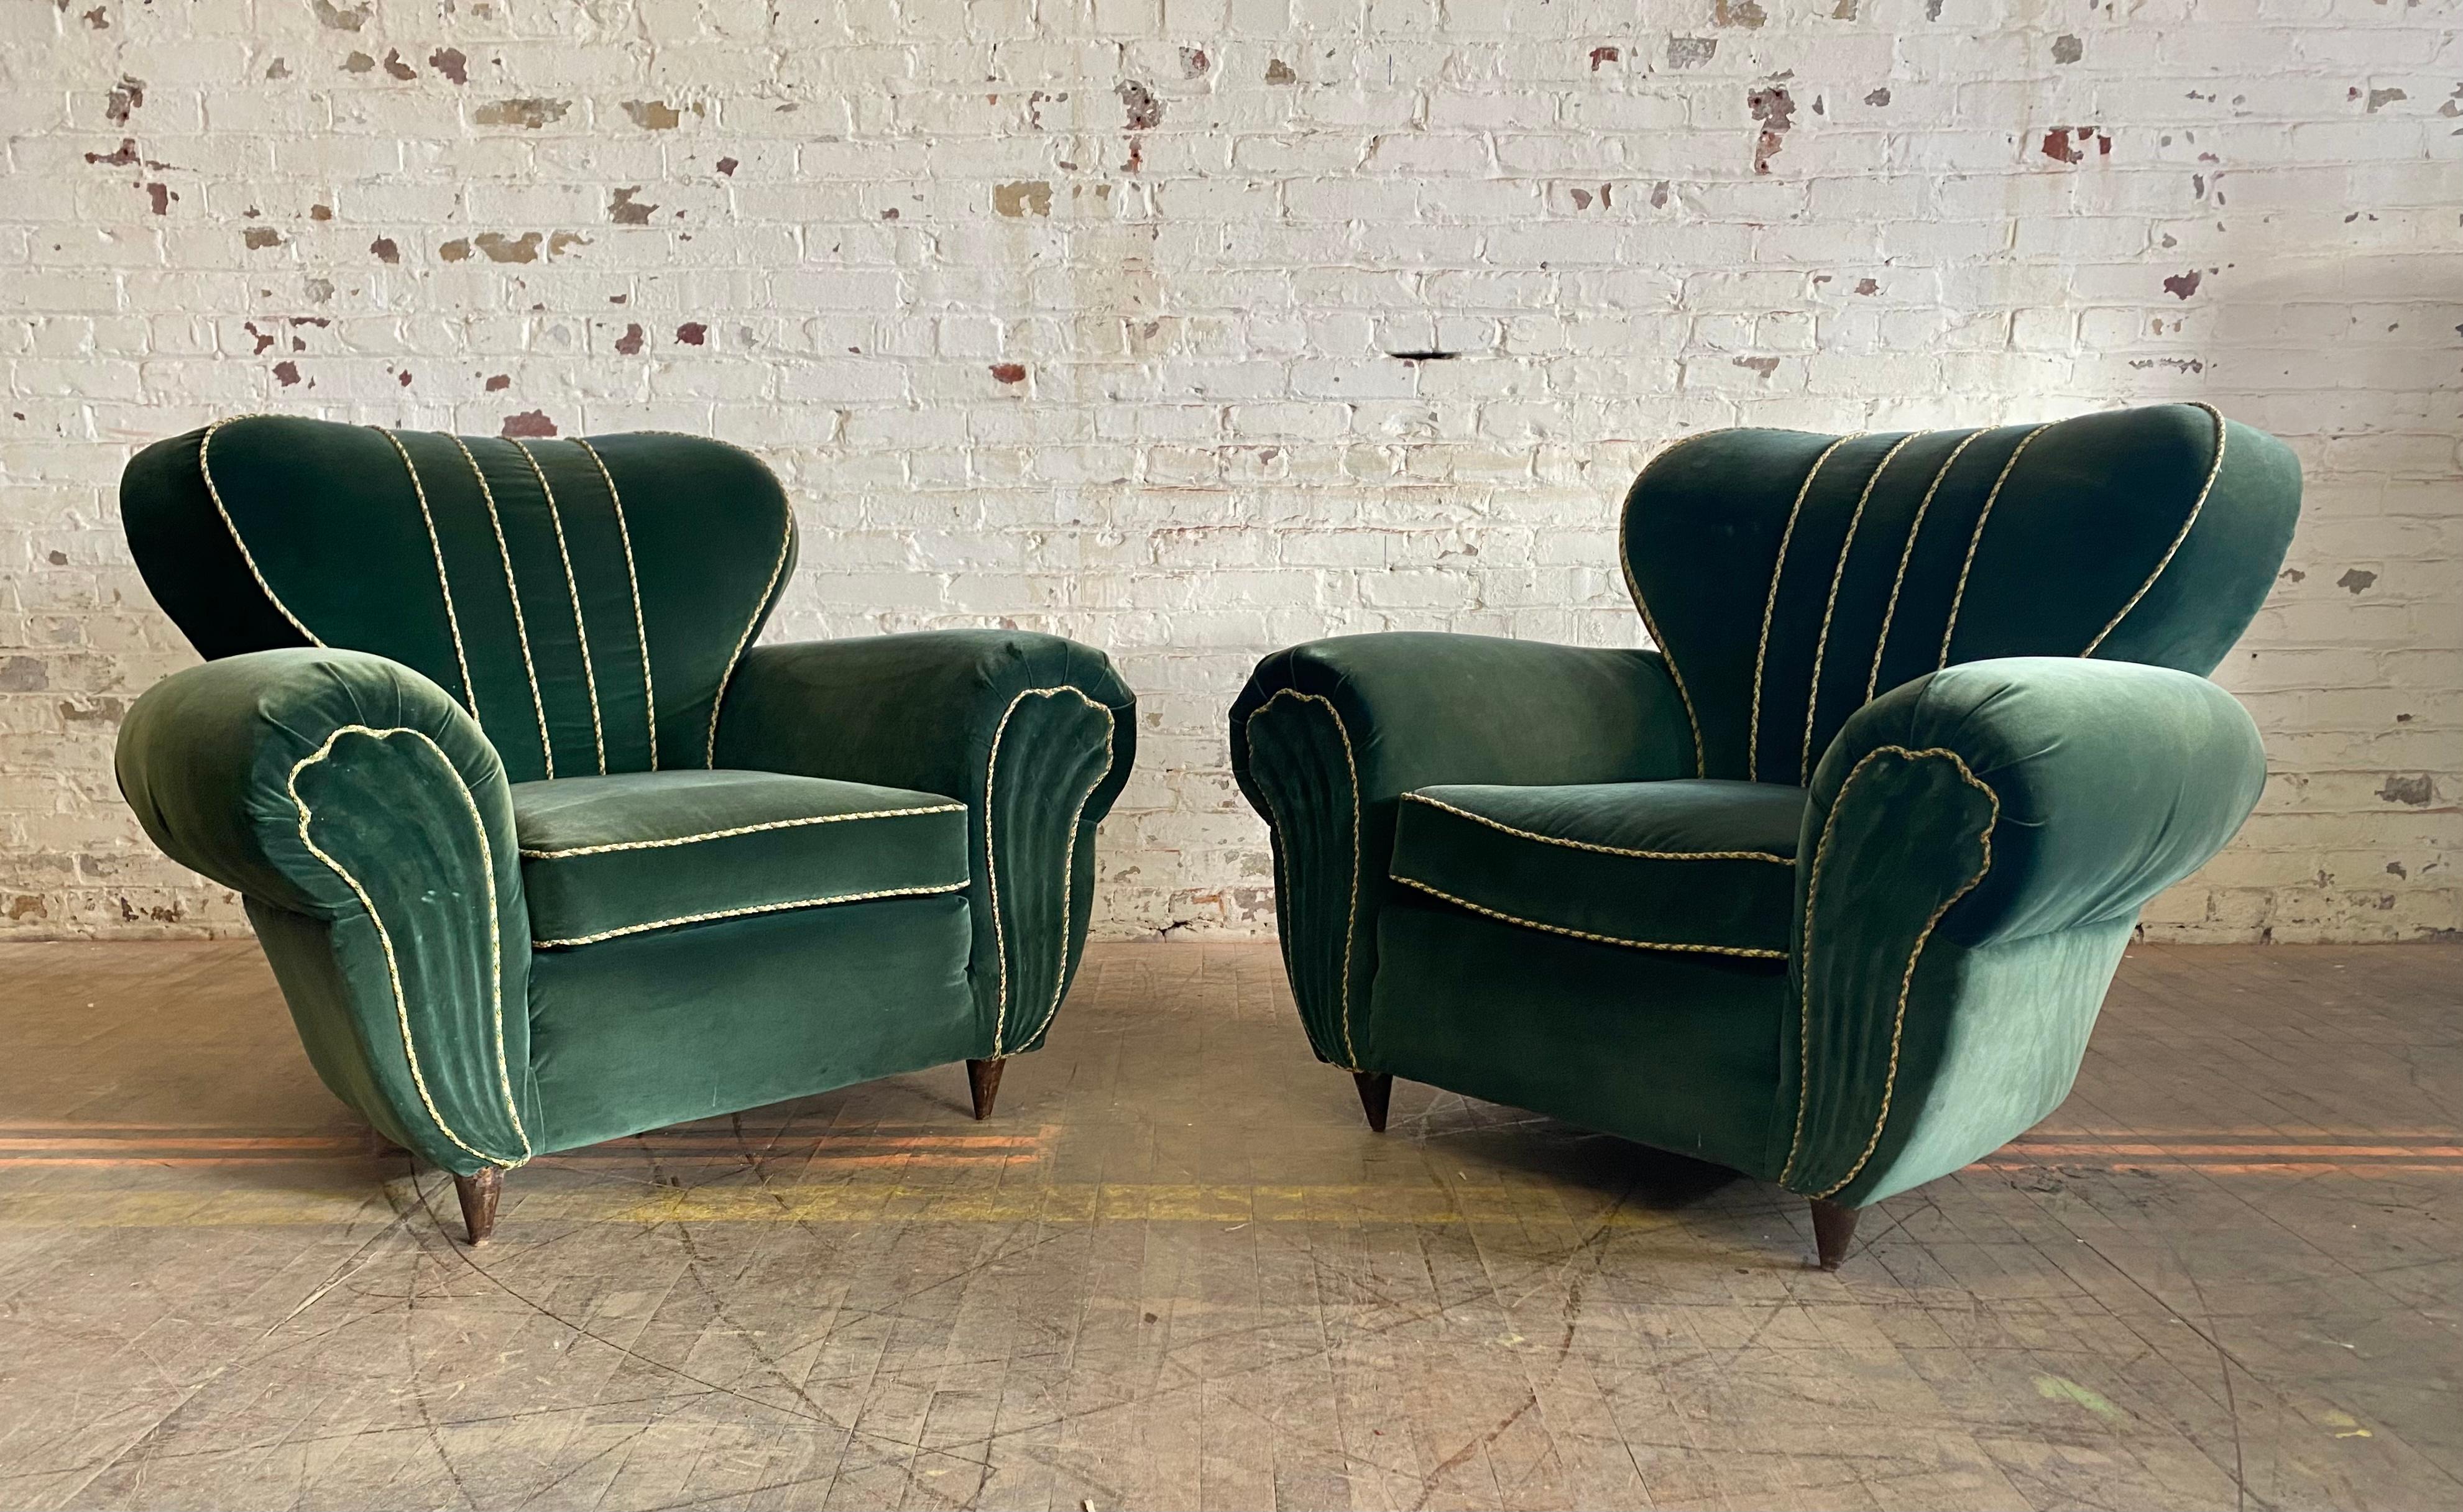 1940s Art Deco Italian Club Chairs, Unusual Form, Oversized by Guglielmo Ulrich For Sale 4